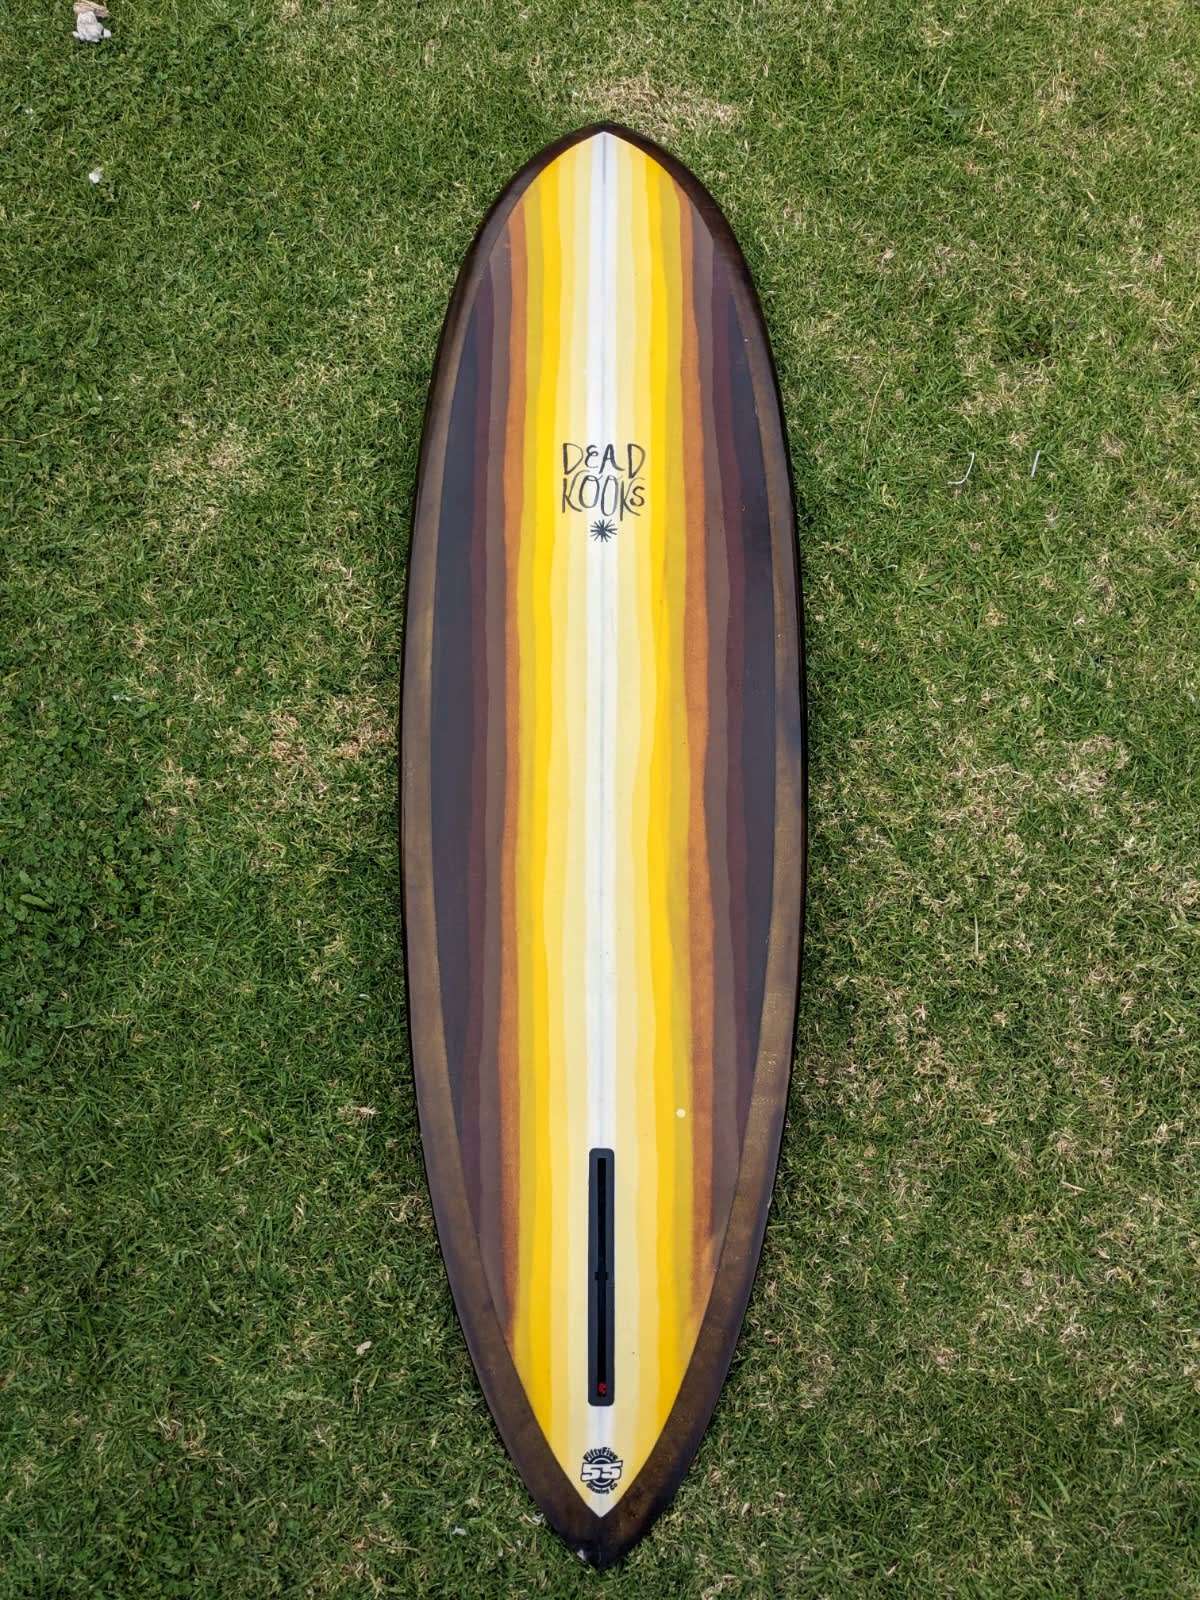 5'3” Dead Kooks Riches TW Surfboard For Sale In Long